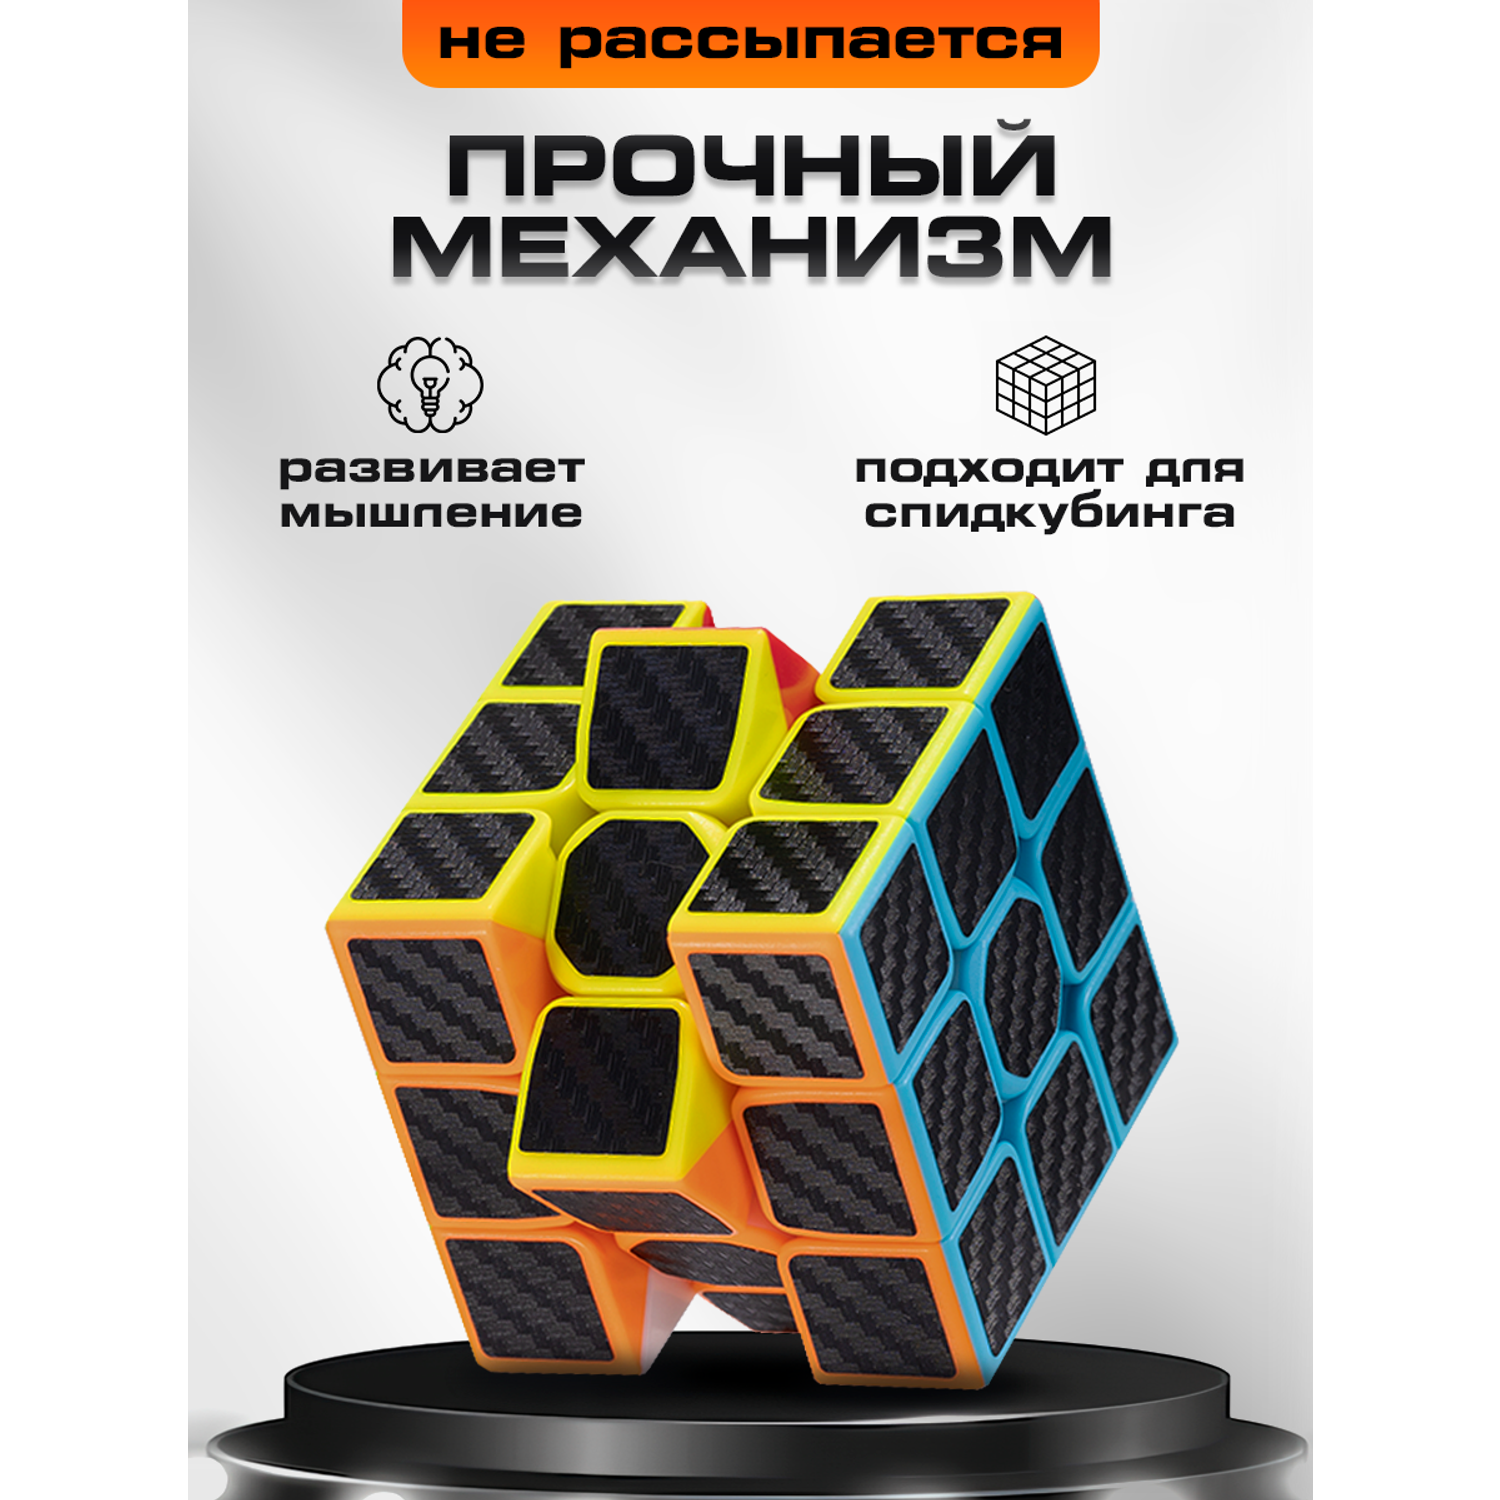 Кубик Рубика 3х3 головоломка SHANTOU карбоновый - фото 3